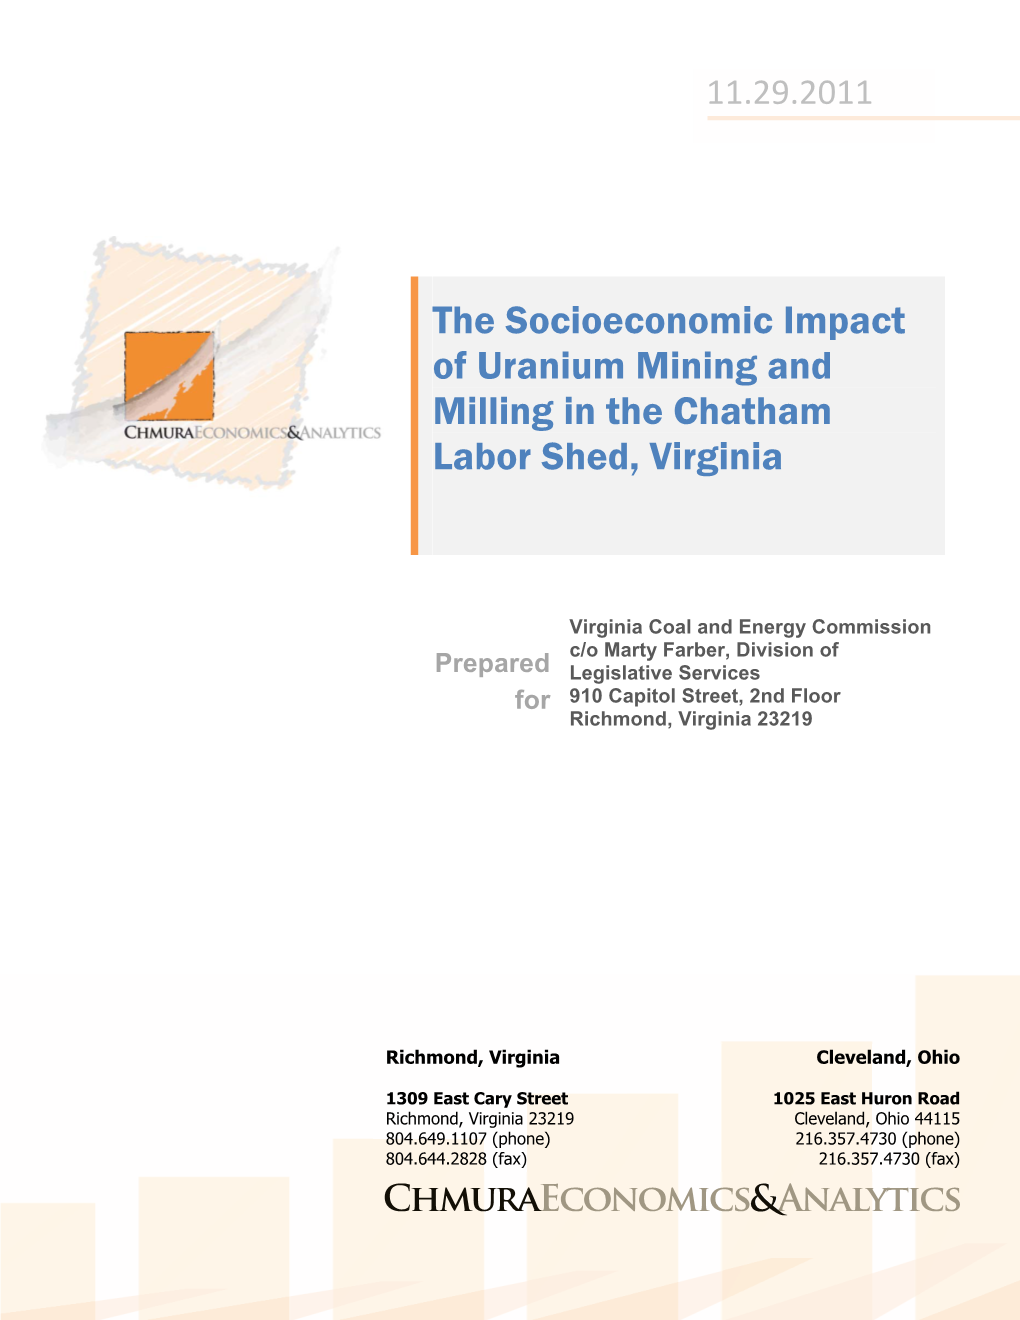 The Chmura Economics and Analytics Study of the Socioeconomic Effects